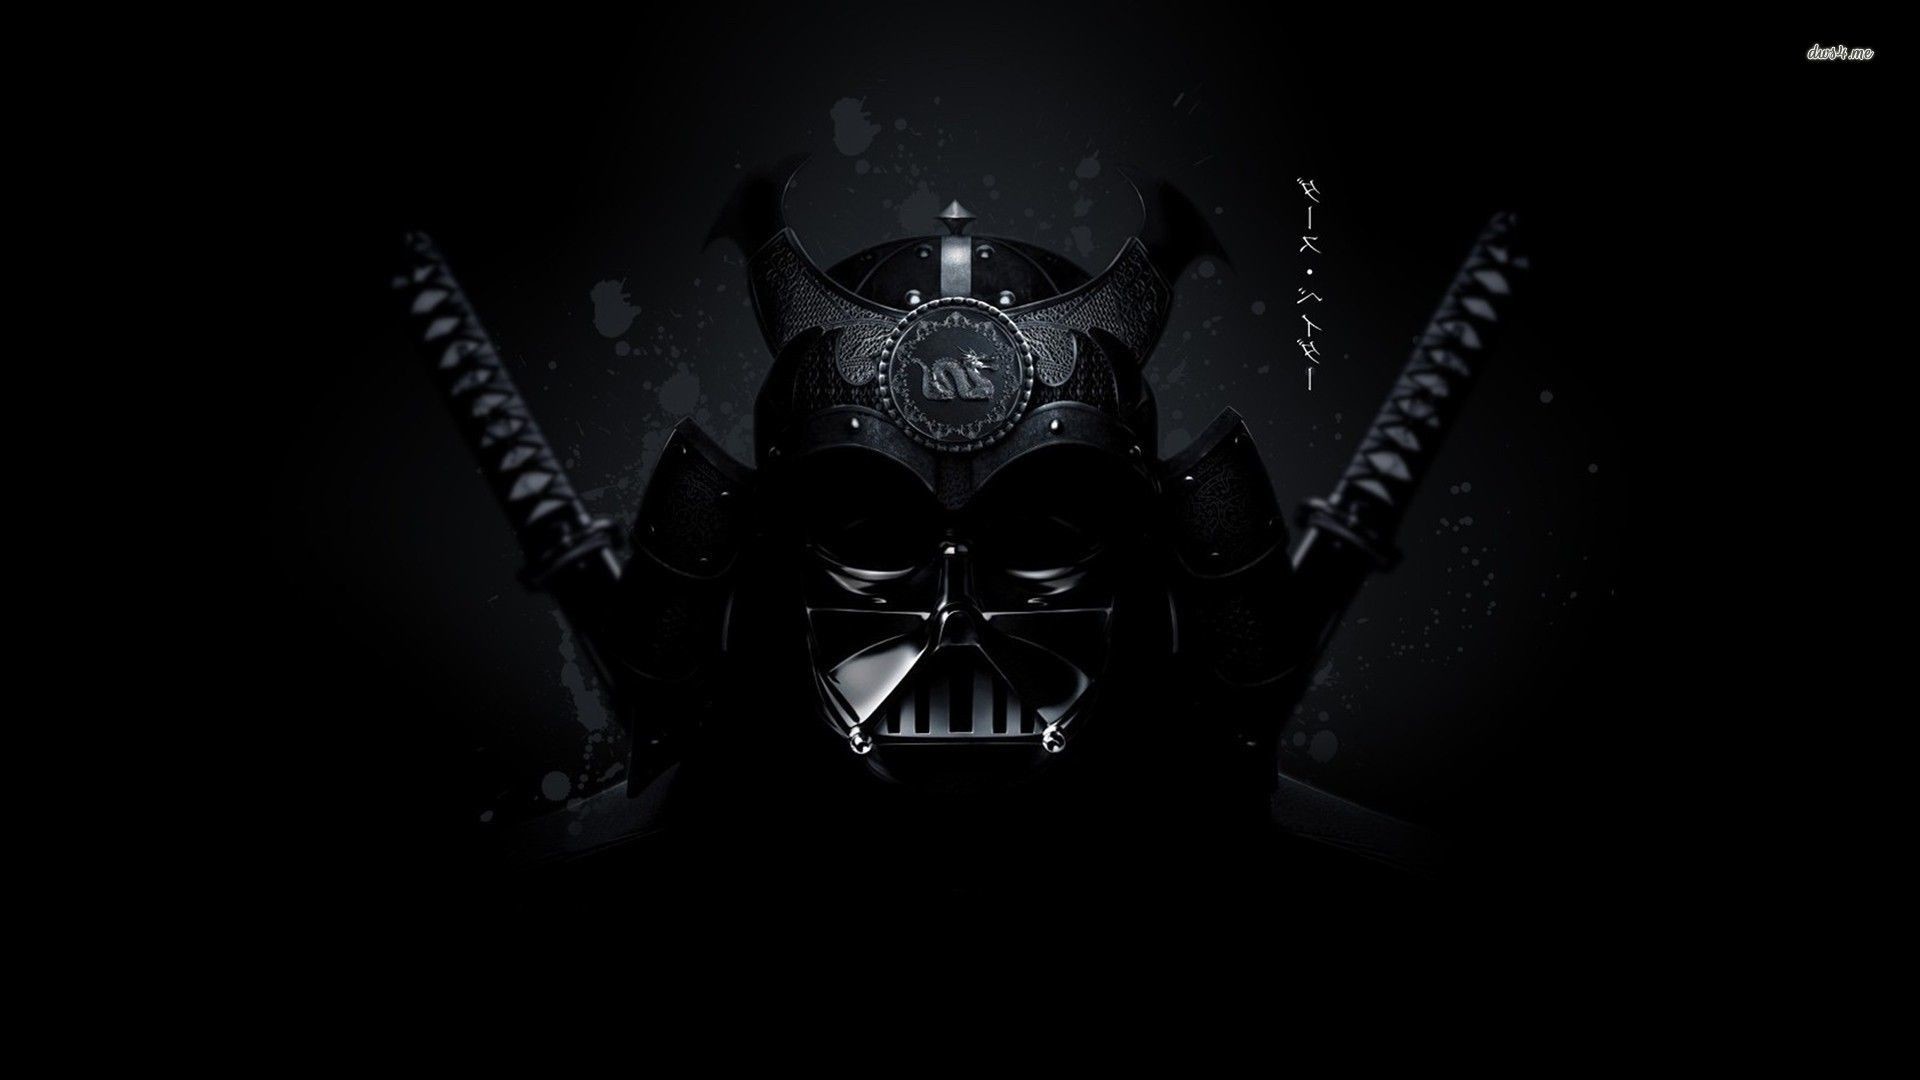 1920x1080 Samurai Darth Vader wallpaper - Digital Art wallpapers - #16166